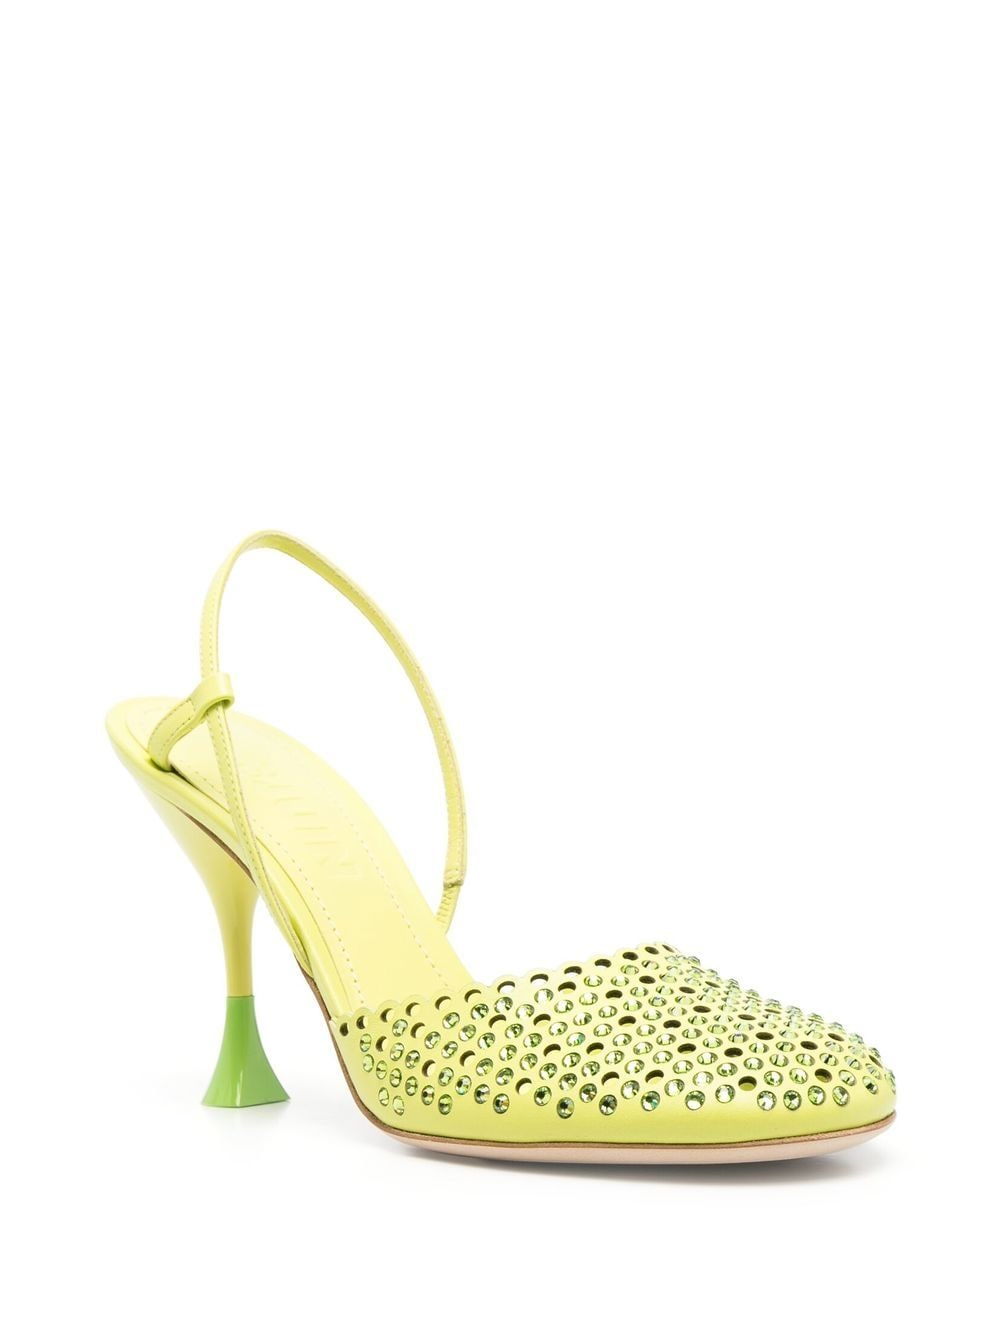 Image 2 of 3juin rhinestones-embellishment high heels